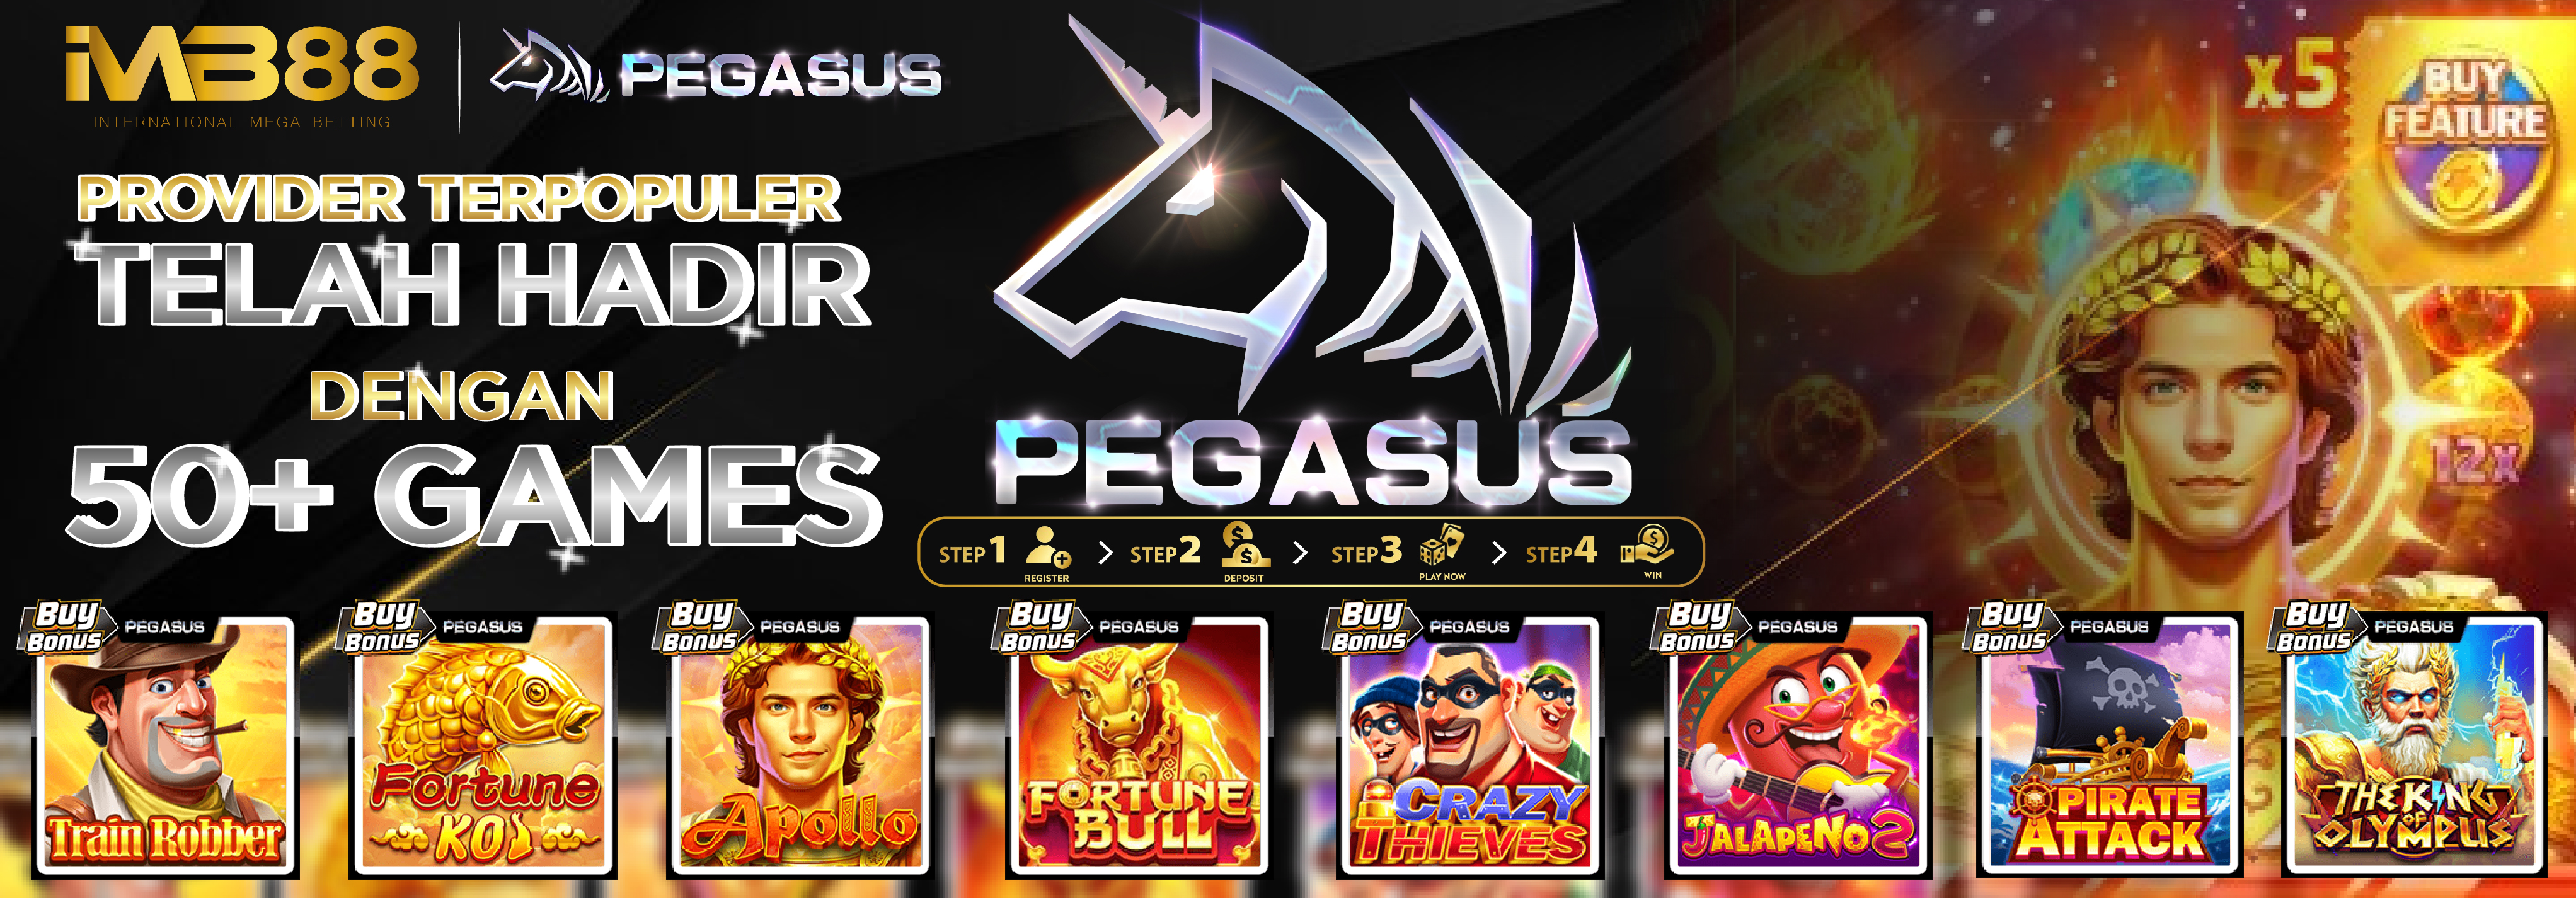 Pegasus Provider